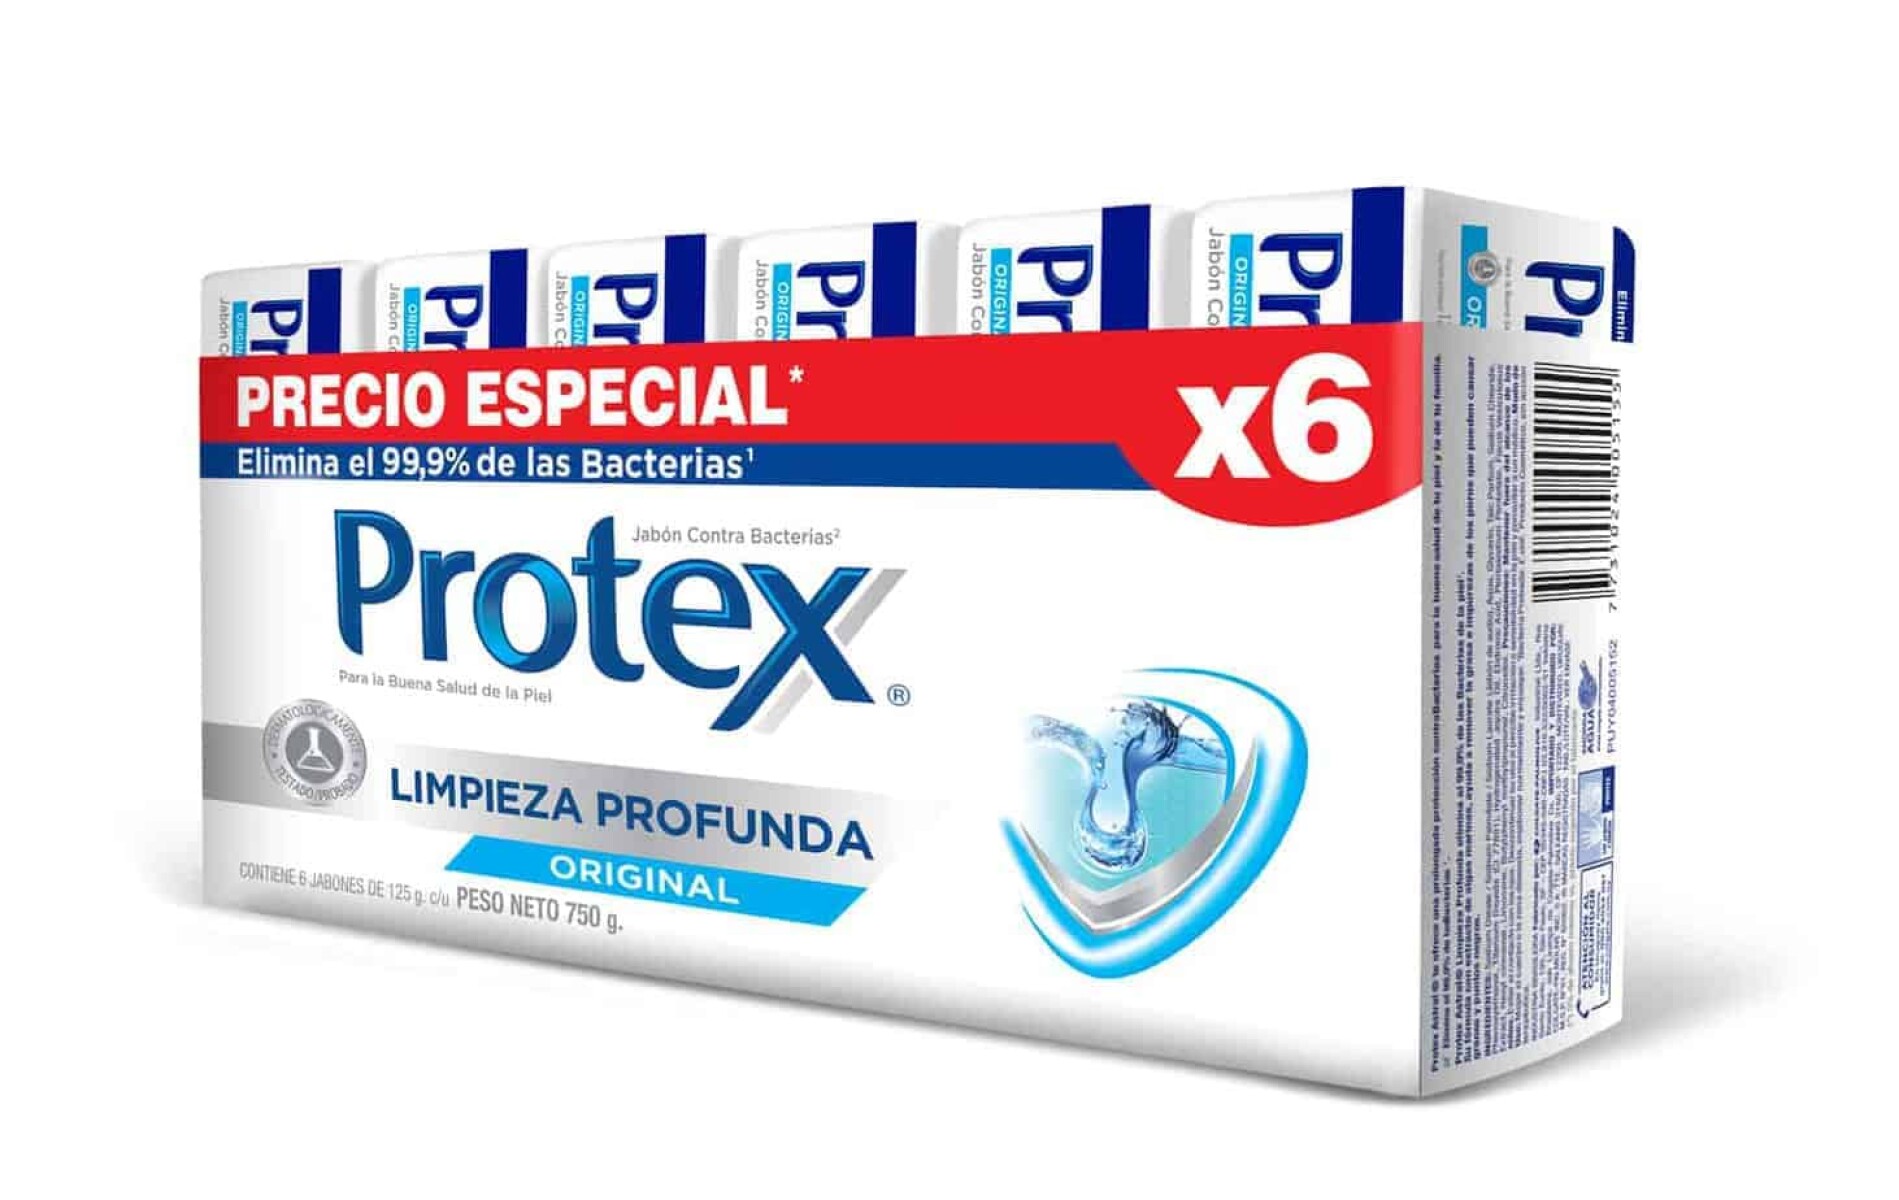 Protex Limp Profunda 125 Grs Pack 6X 